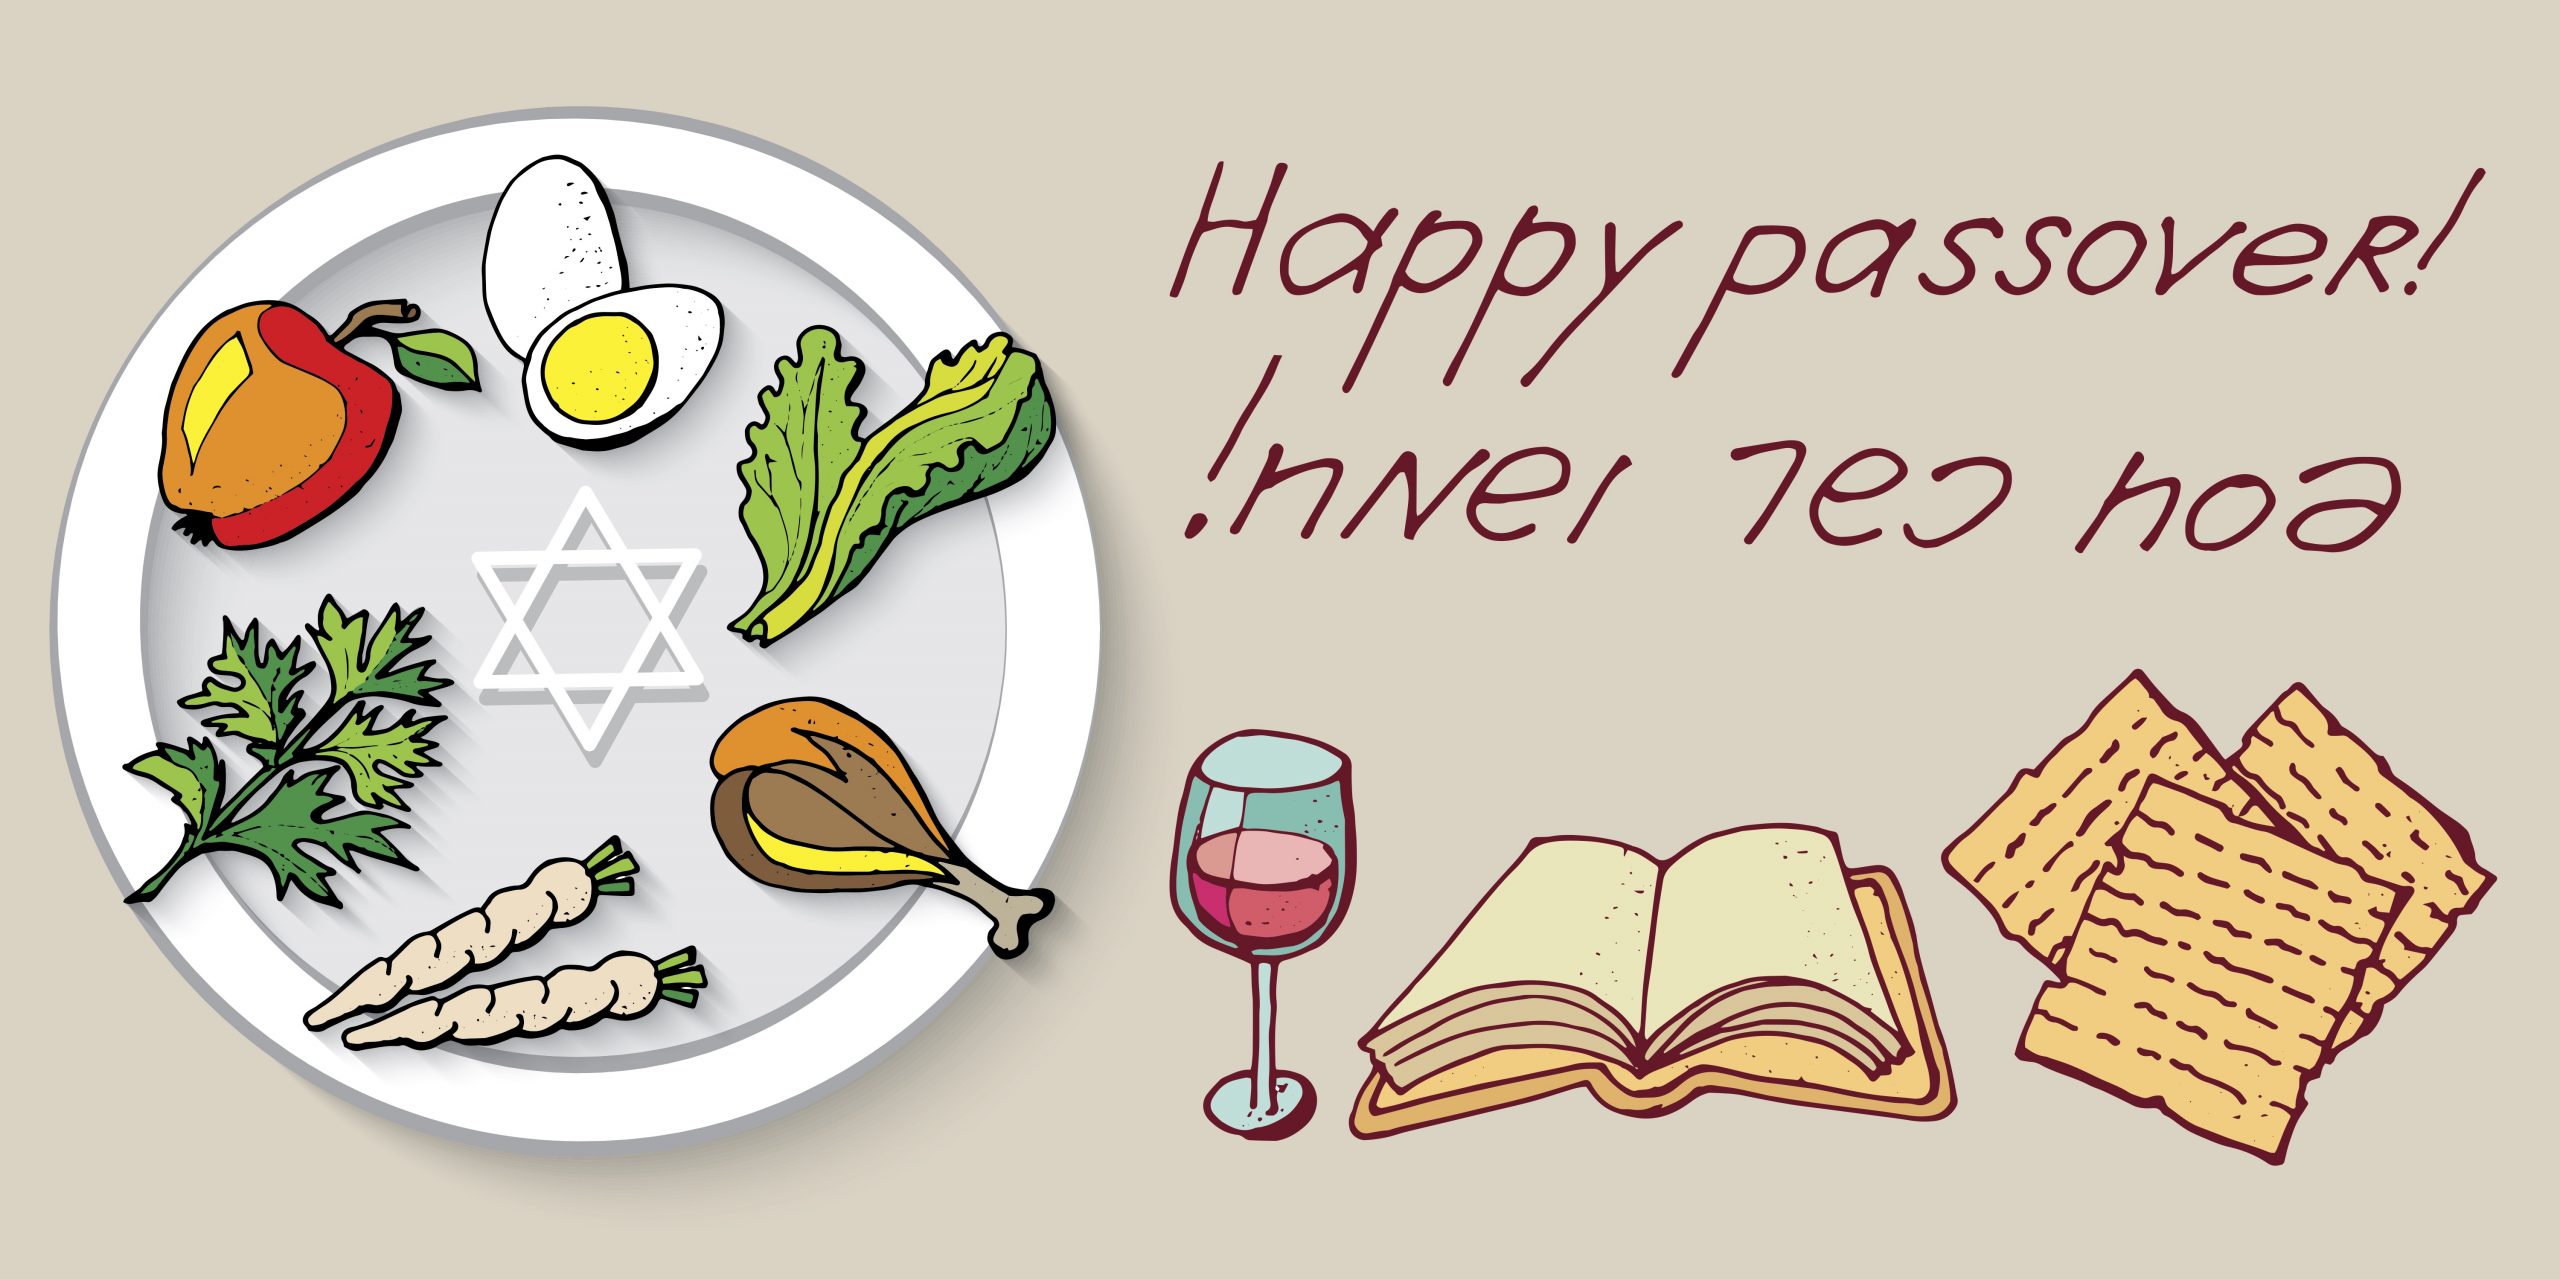 Happy Passover with Seder plate, wine, matzah, Haggadah